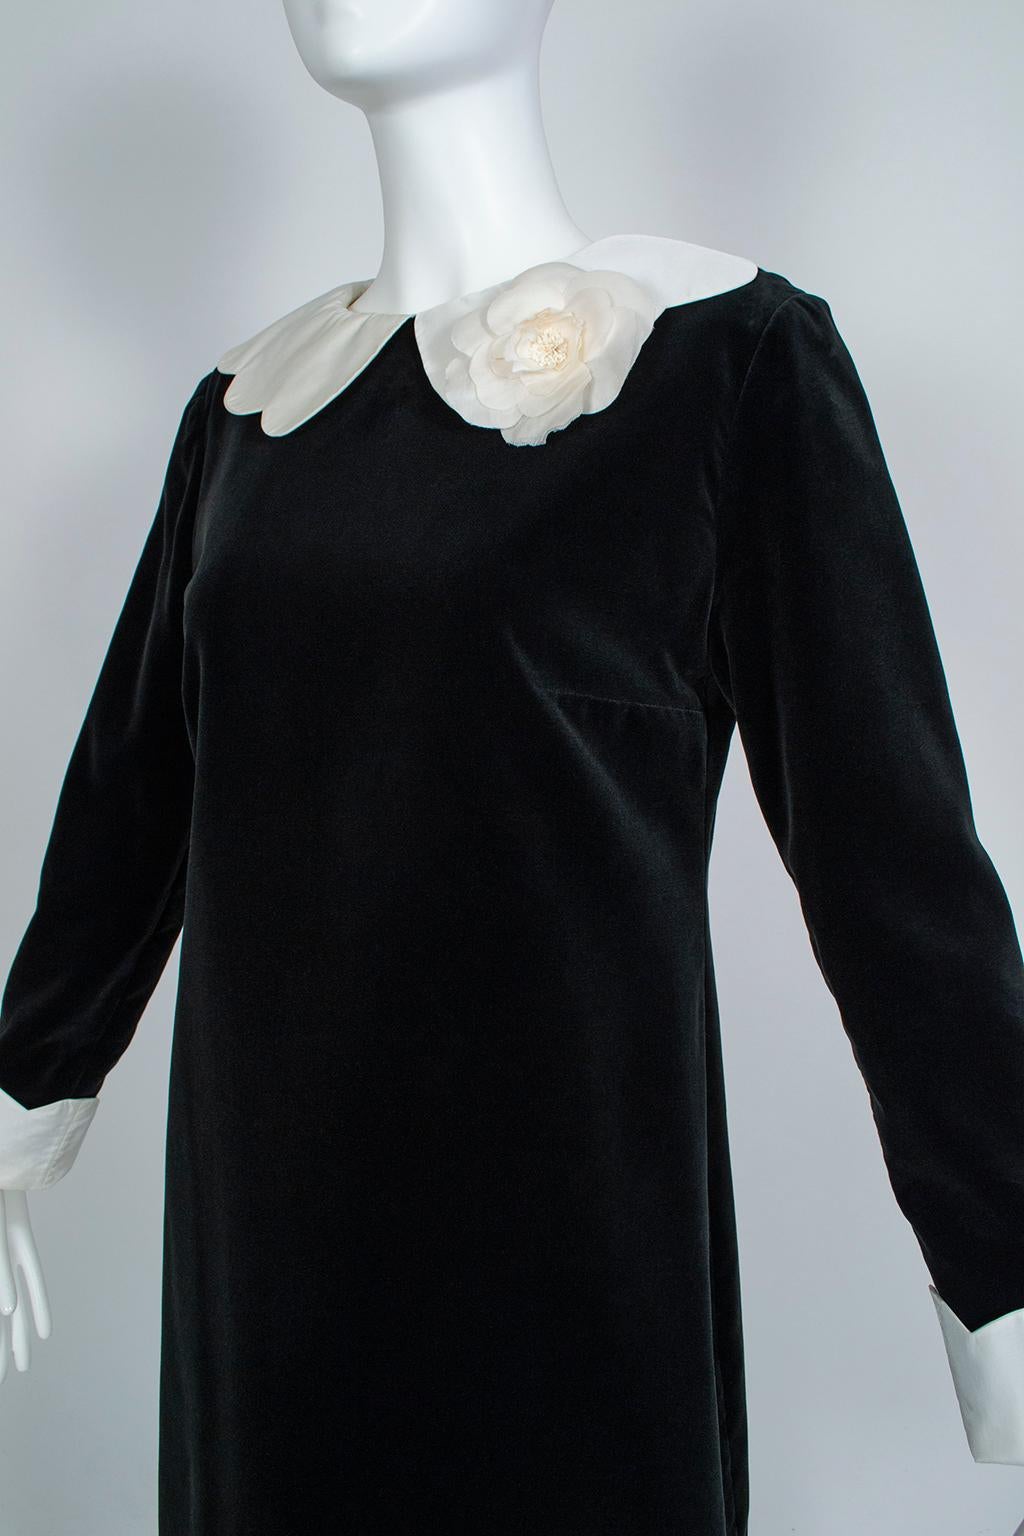 chanel black dress white collar